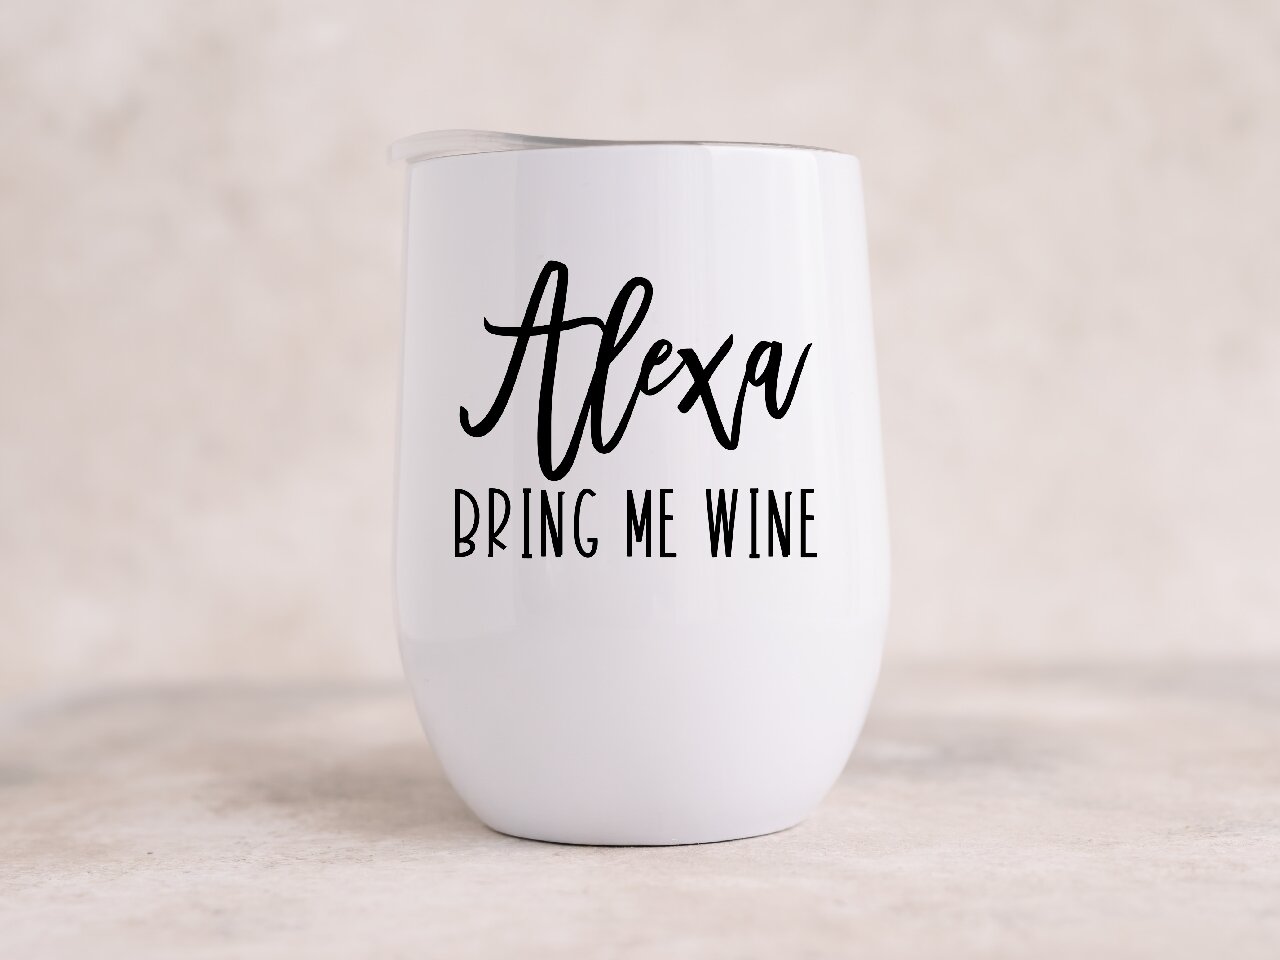 Alexa Bring Me Wine - Wine Tumbler